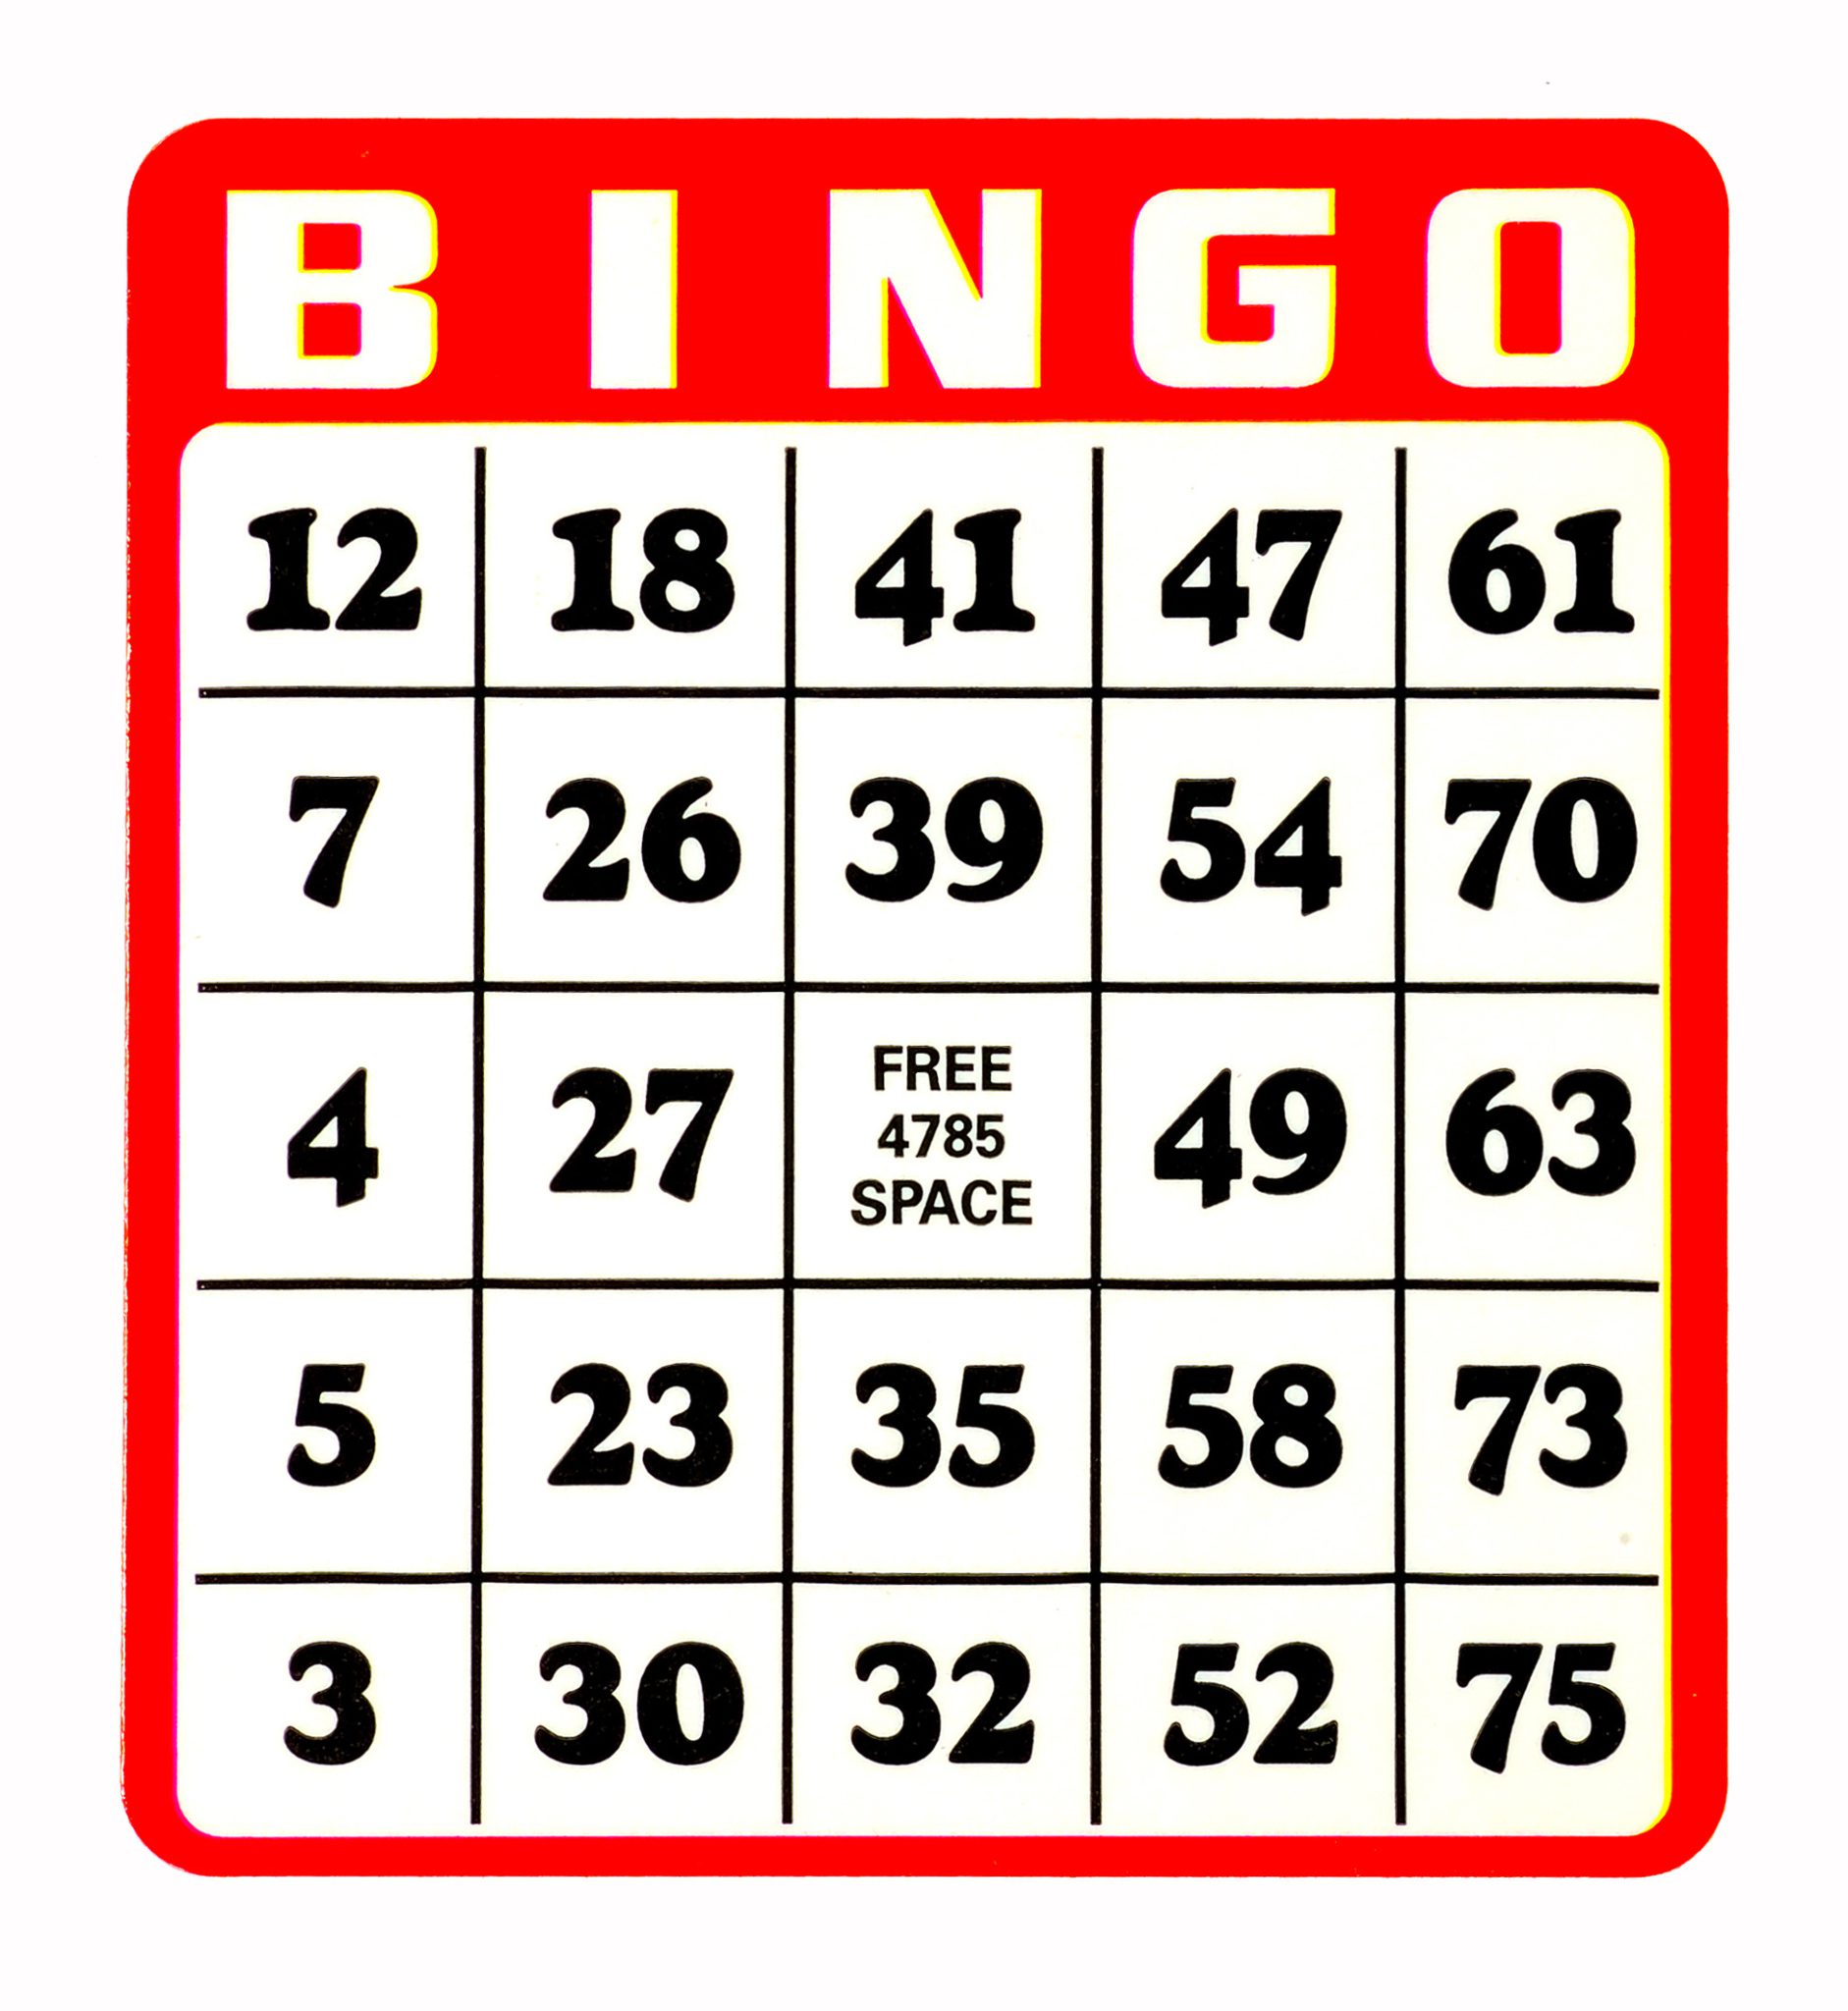 Bingo Ordinance - Pinellas County